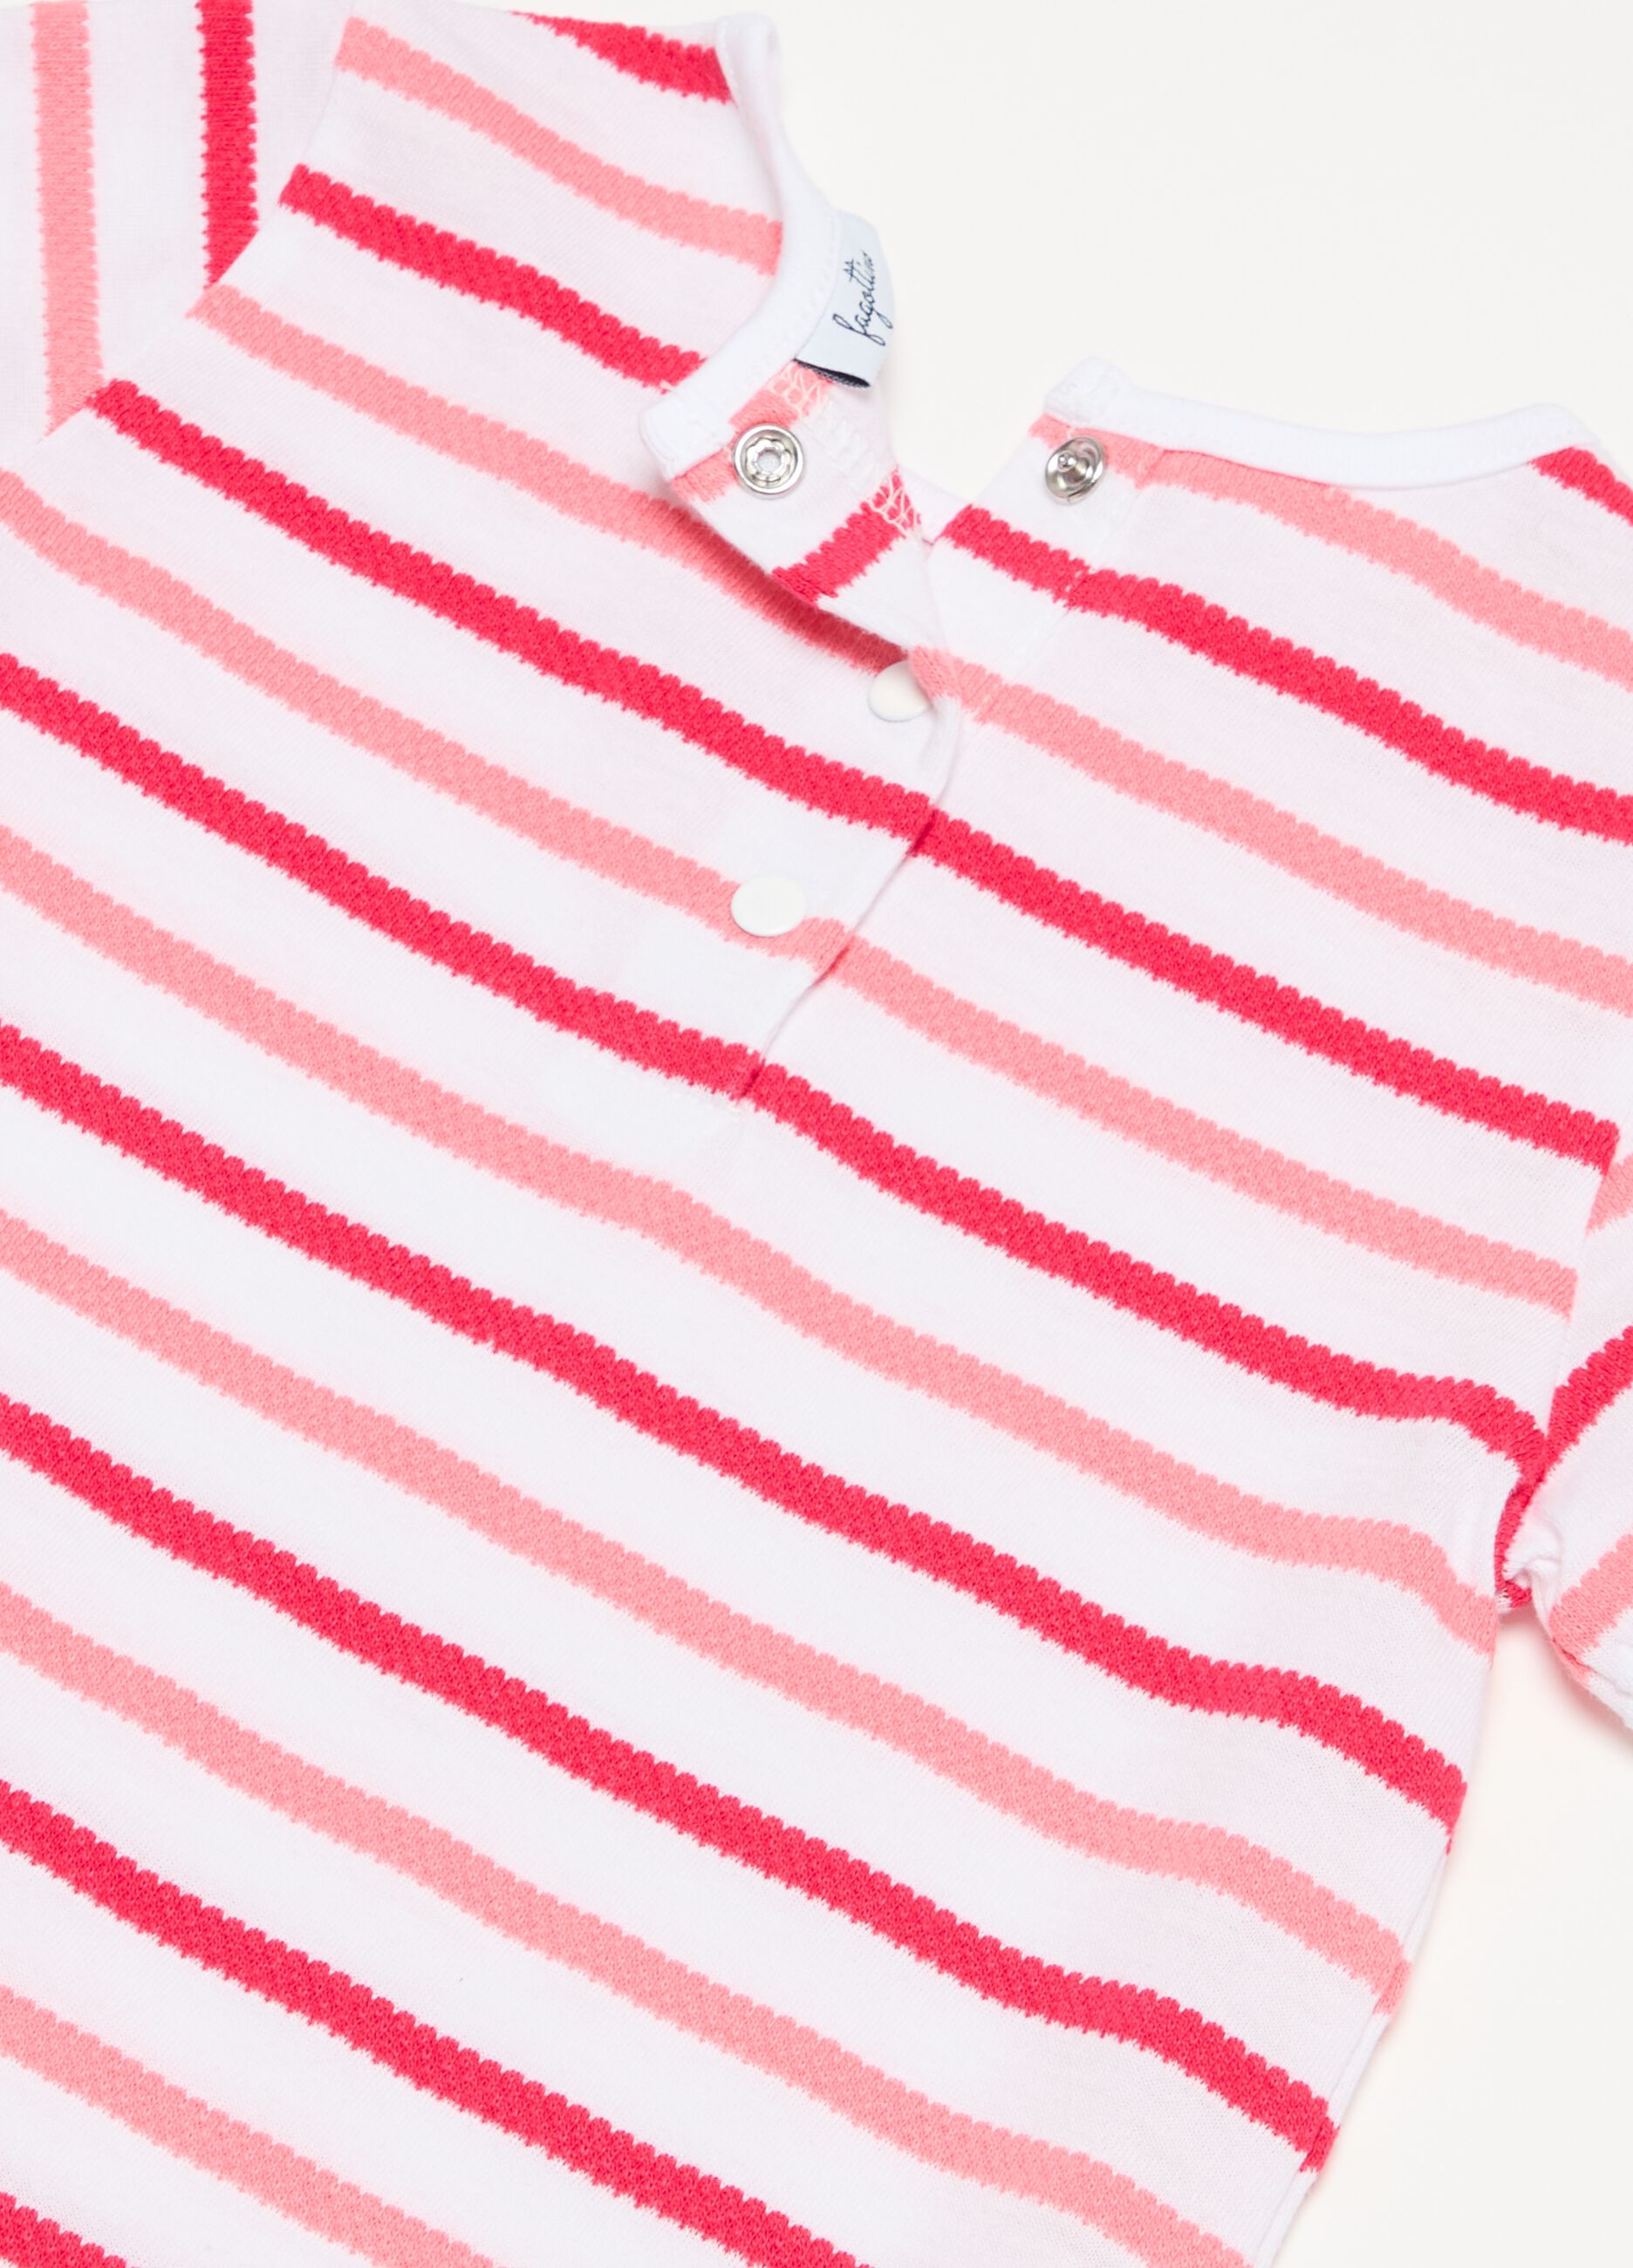 Jacquard t-shirt with striped pattern